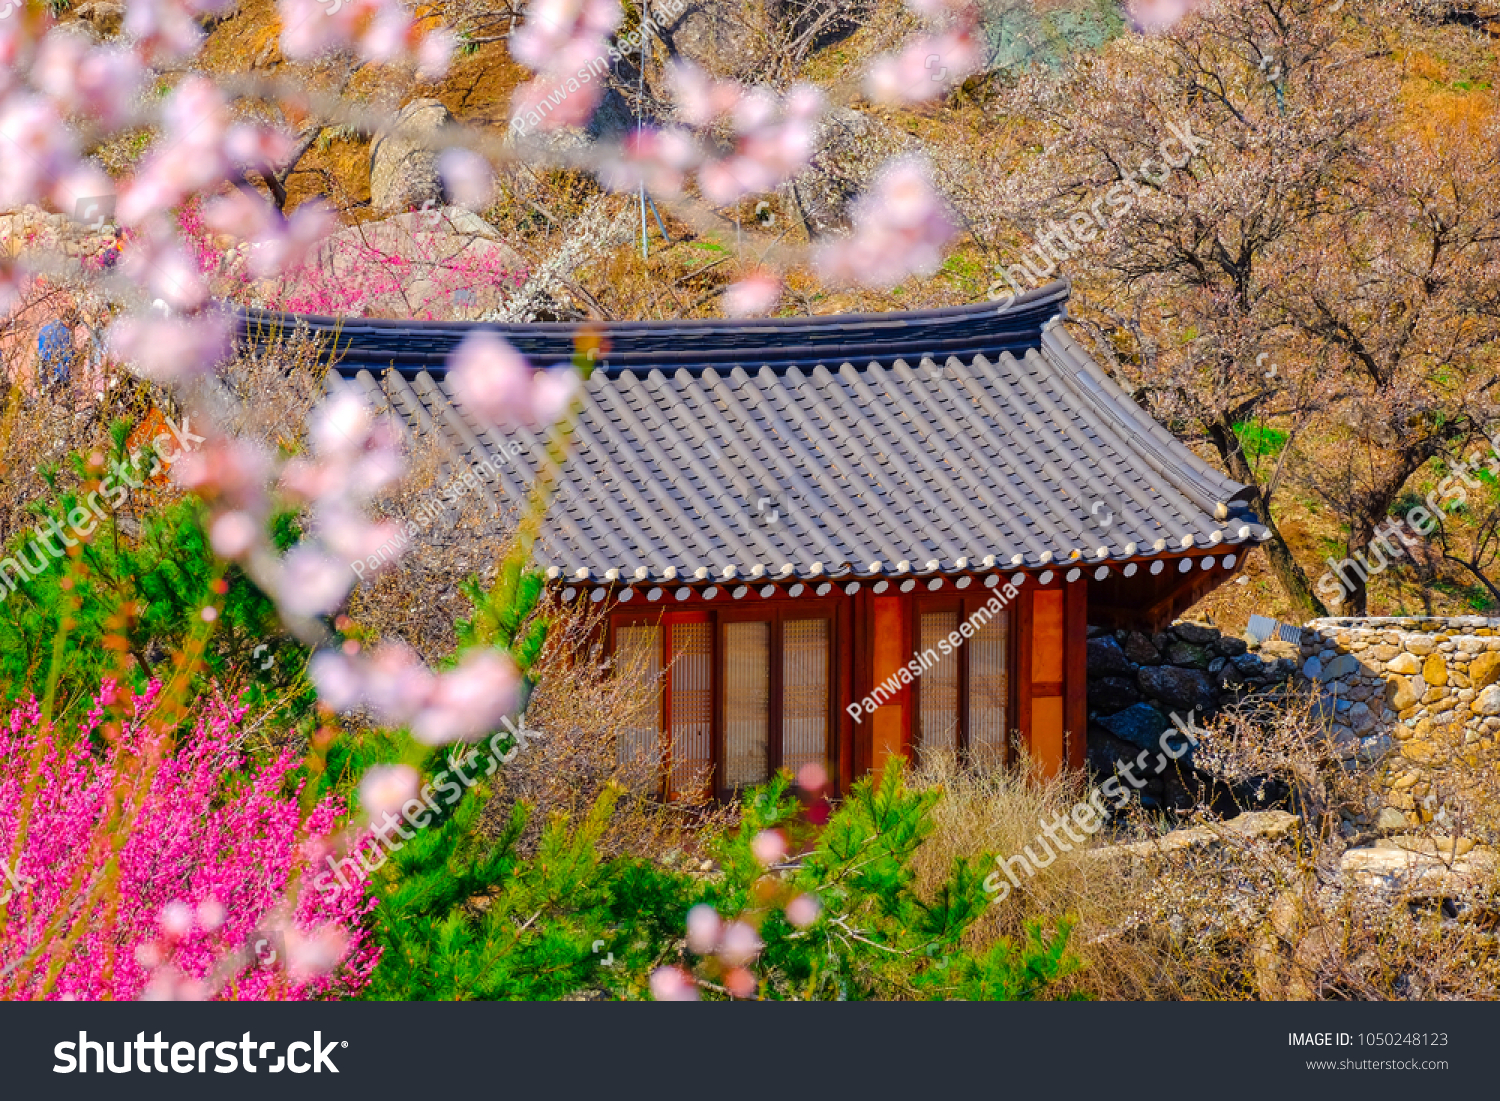 Spring season in korea